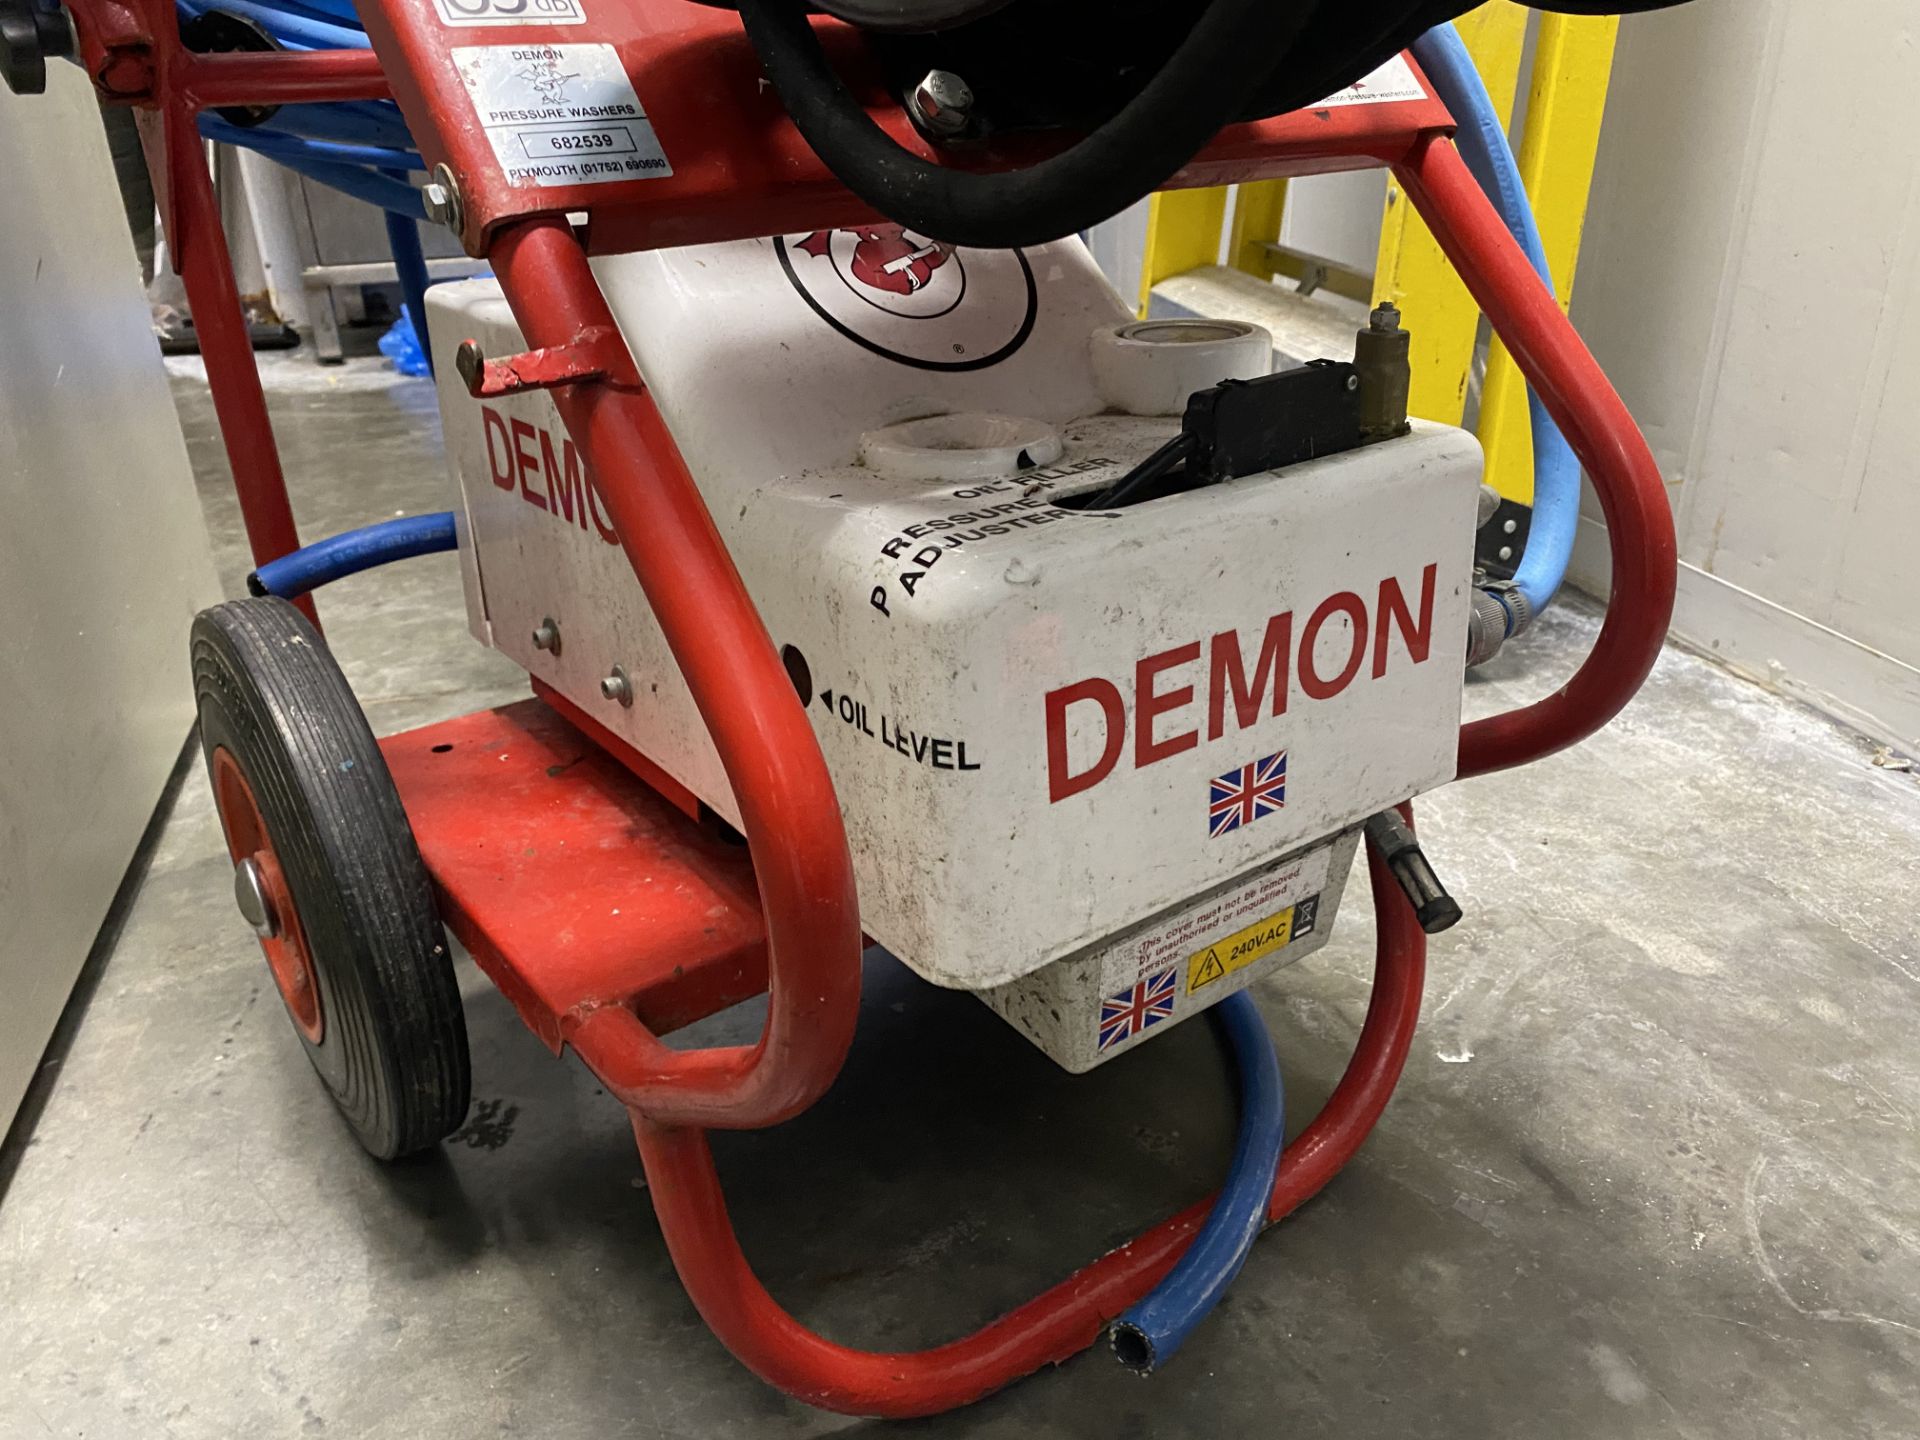 Demon mobile pressure washer, SN 682539